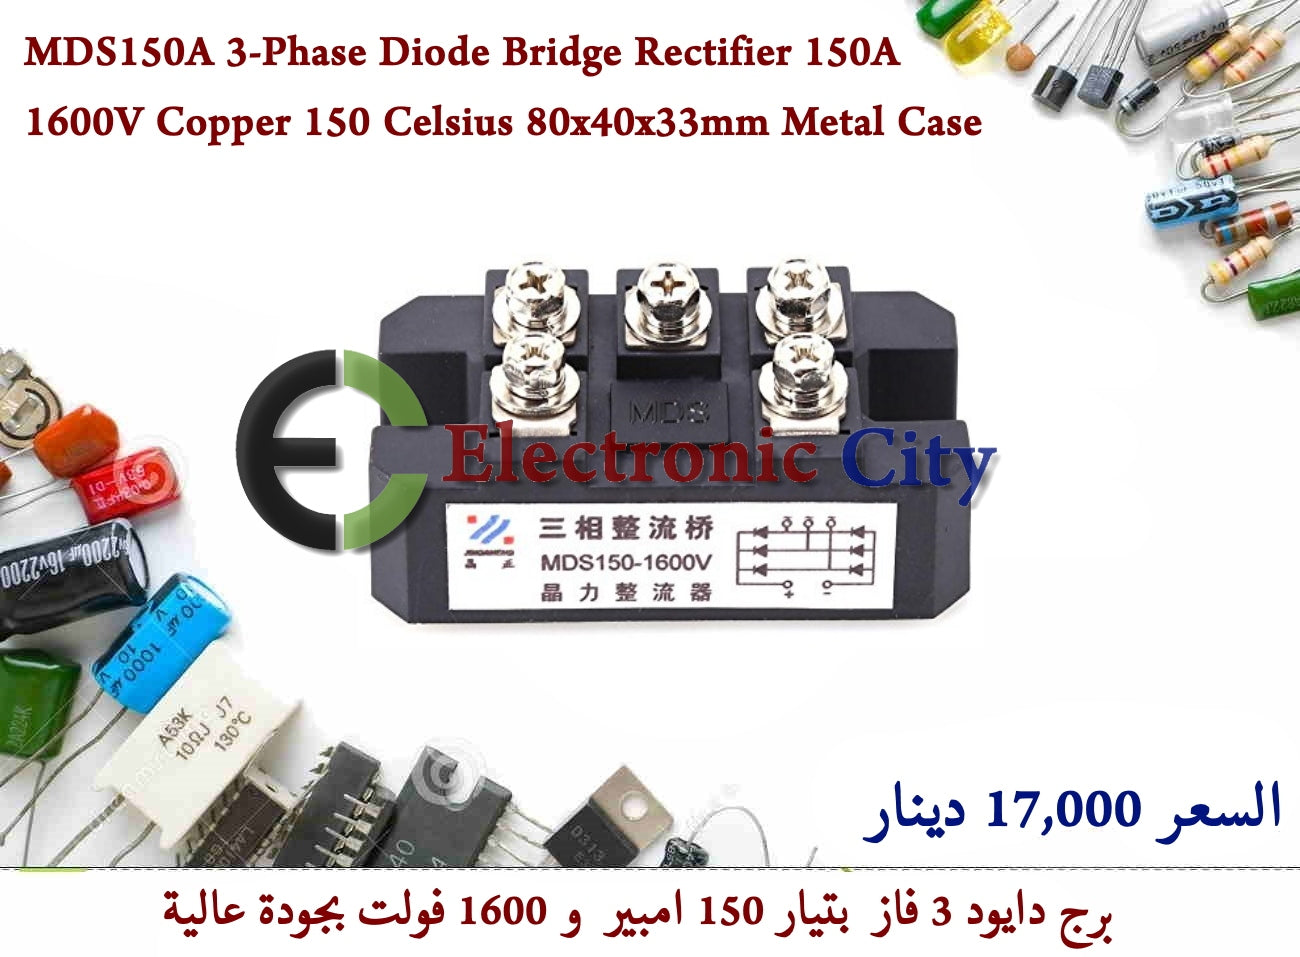 MDS150A 3-Phase Diode Bridge Rectifier 150A Amp 1600V Copper 150 Celsius 80x40x33mm Metal Case #R9 012145